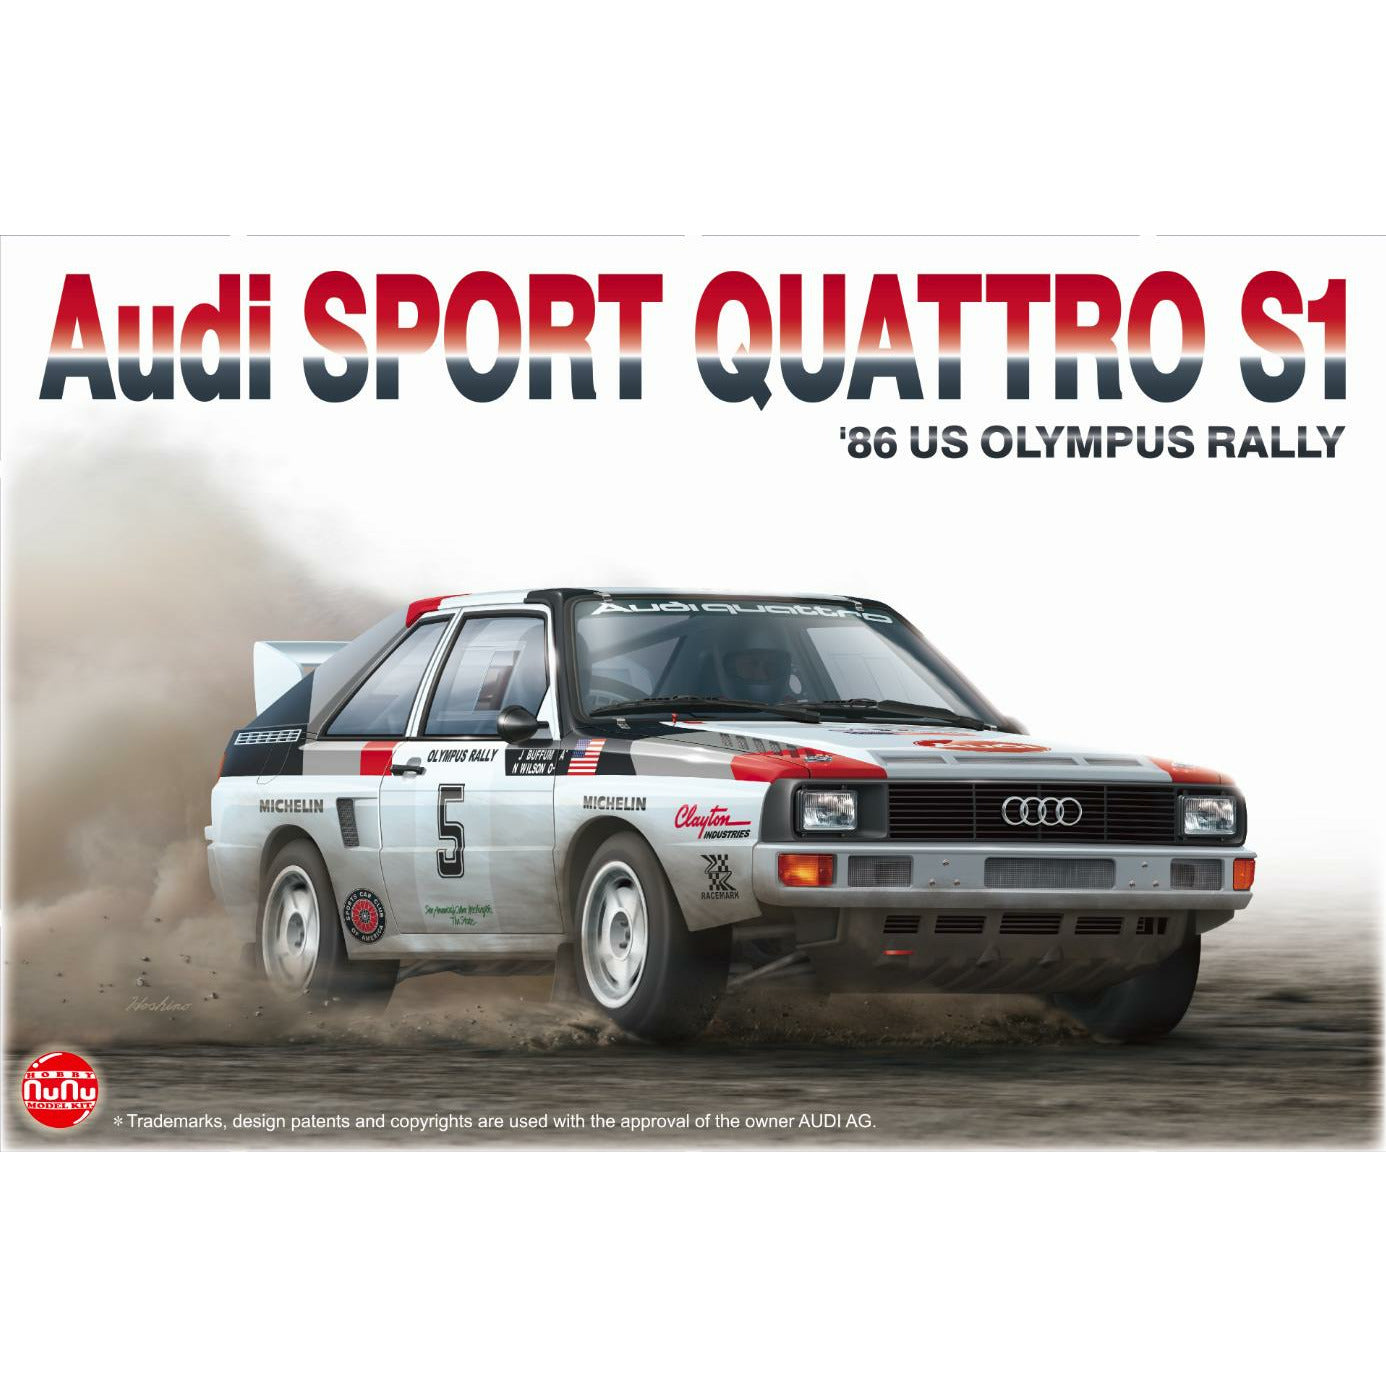 Audi Sport Quattro S1 '86 US Olympus Rally 1/24 Model Car Kit #PN24023 by Platz